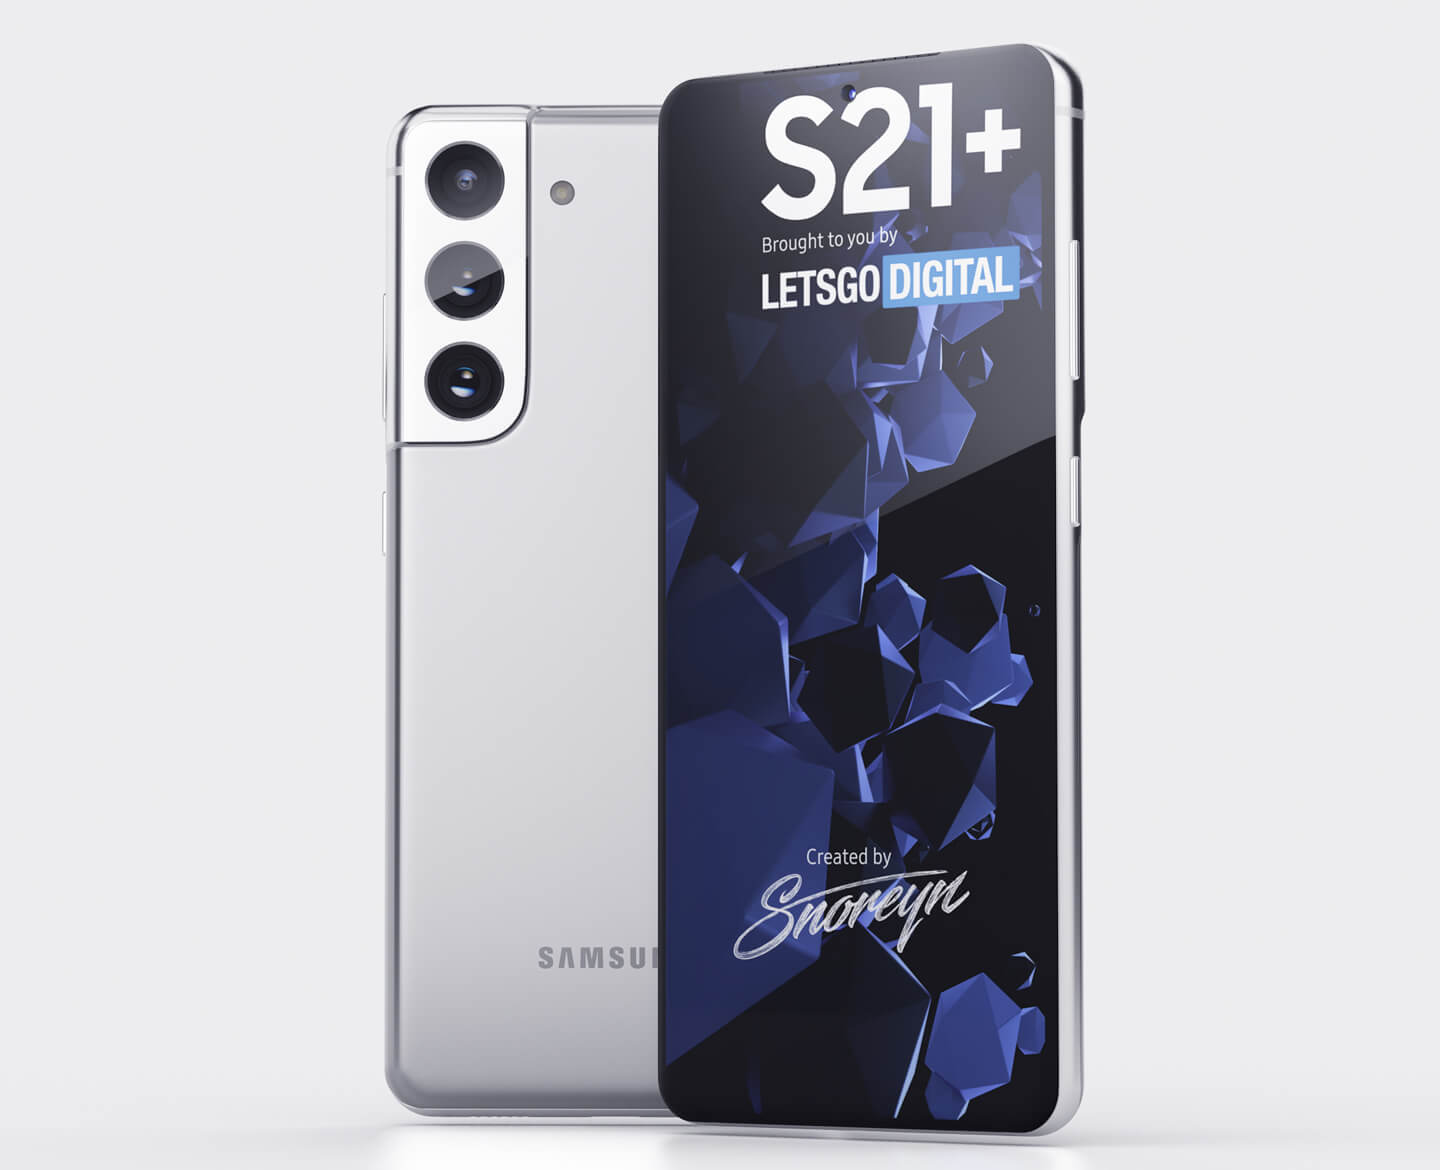 Samsung Galaxy S21 Plus smartphone